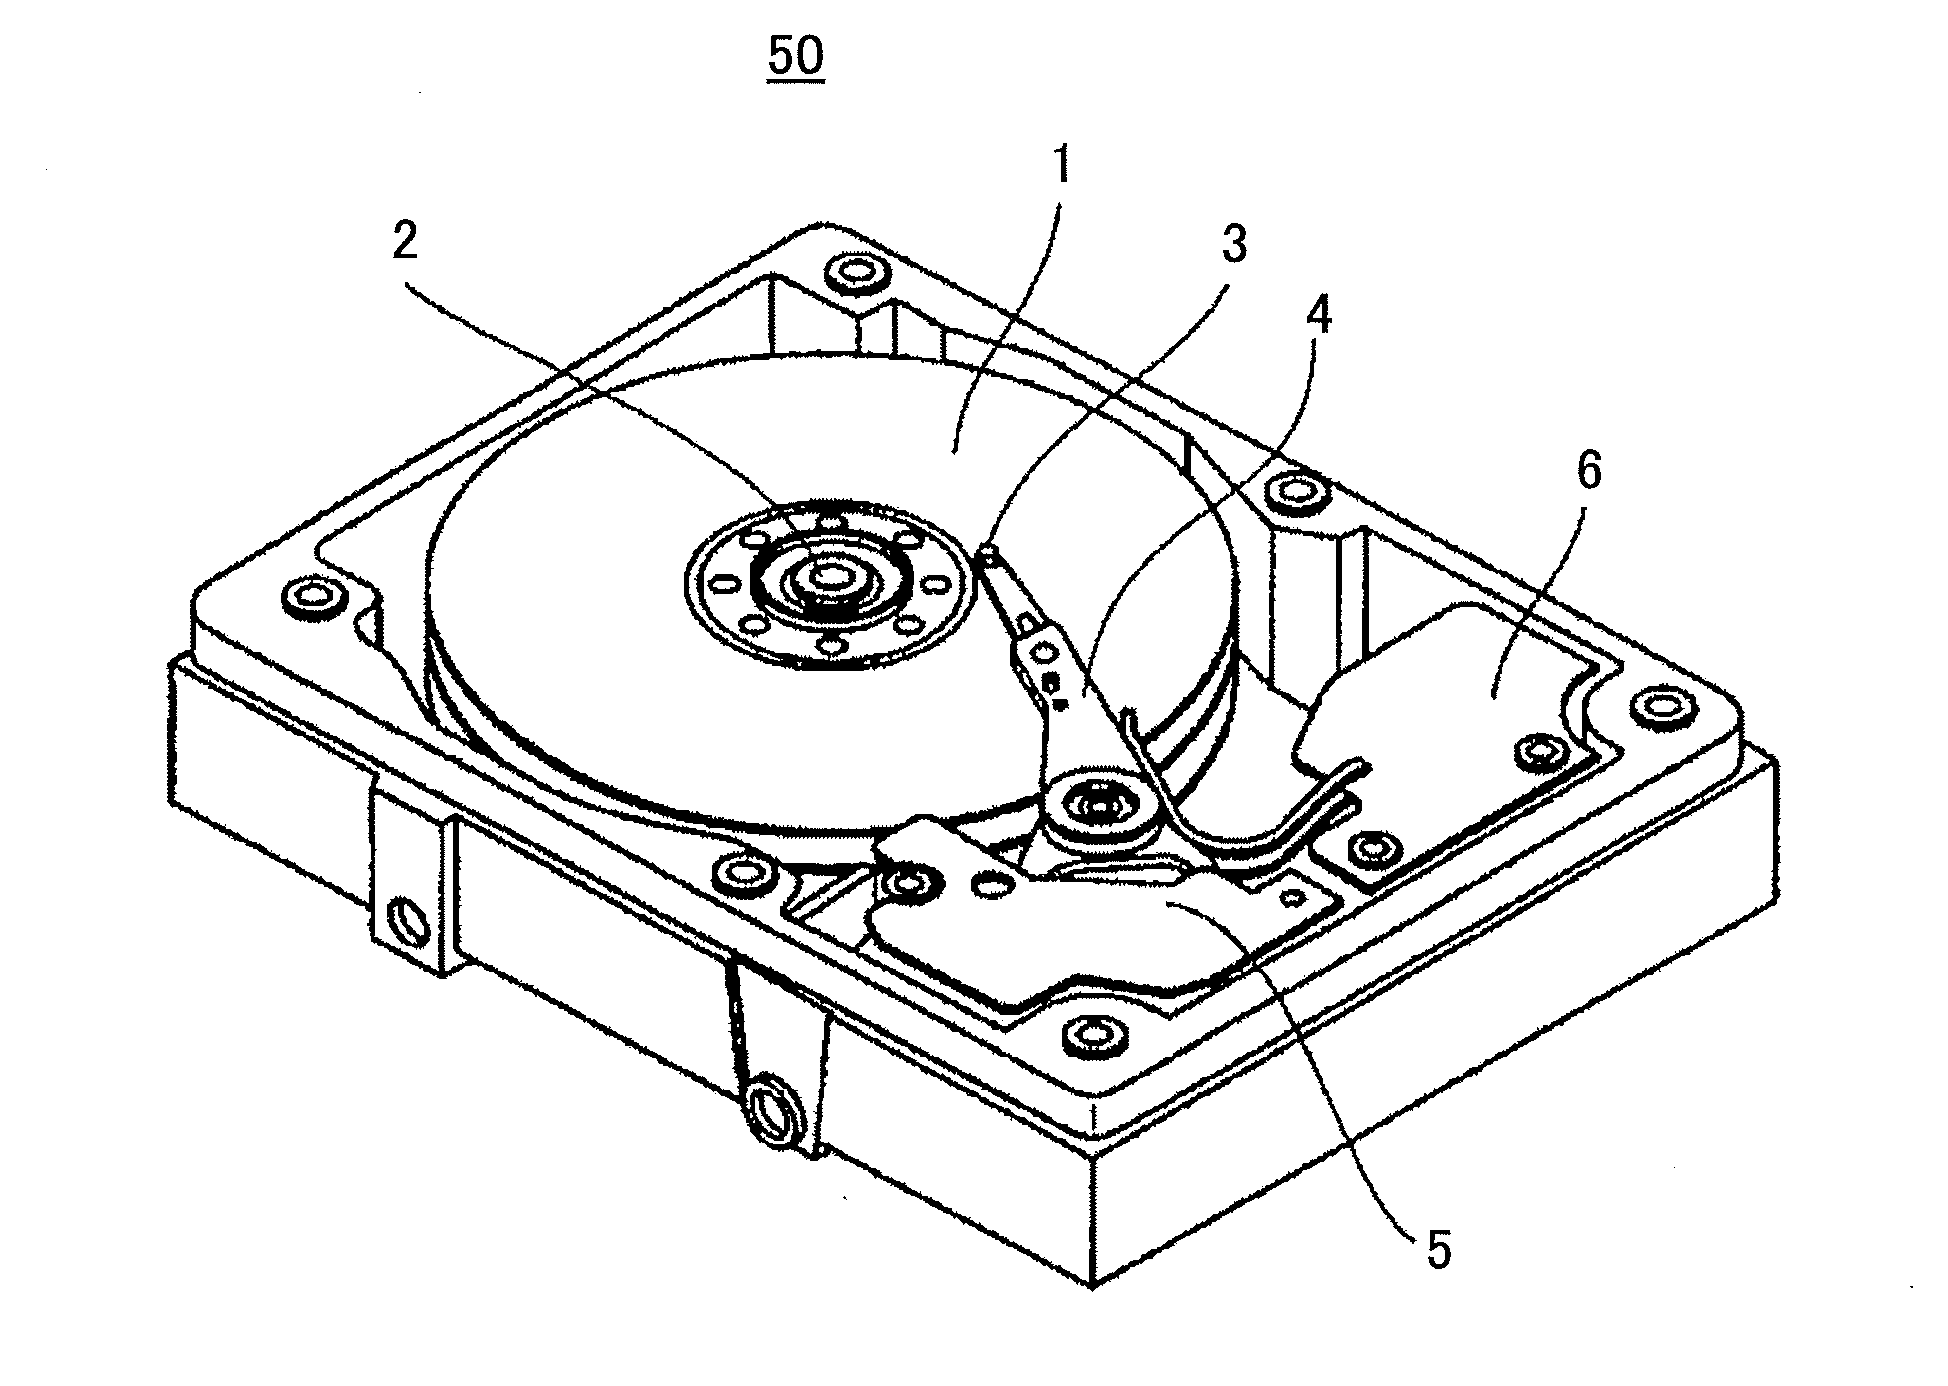 Magnetic recording medium fabrication method and apparatus